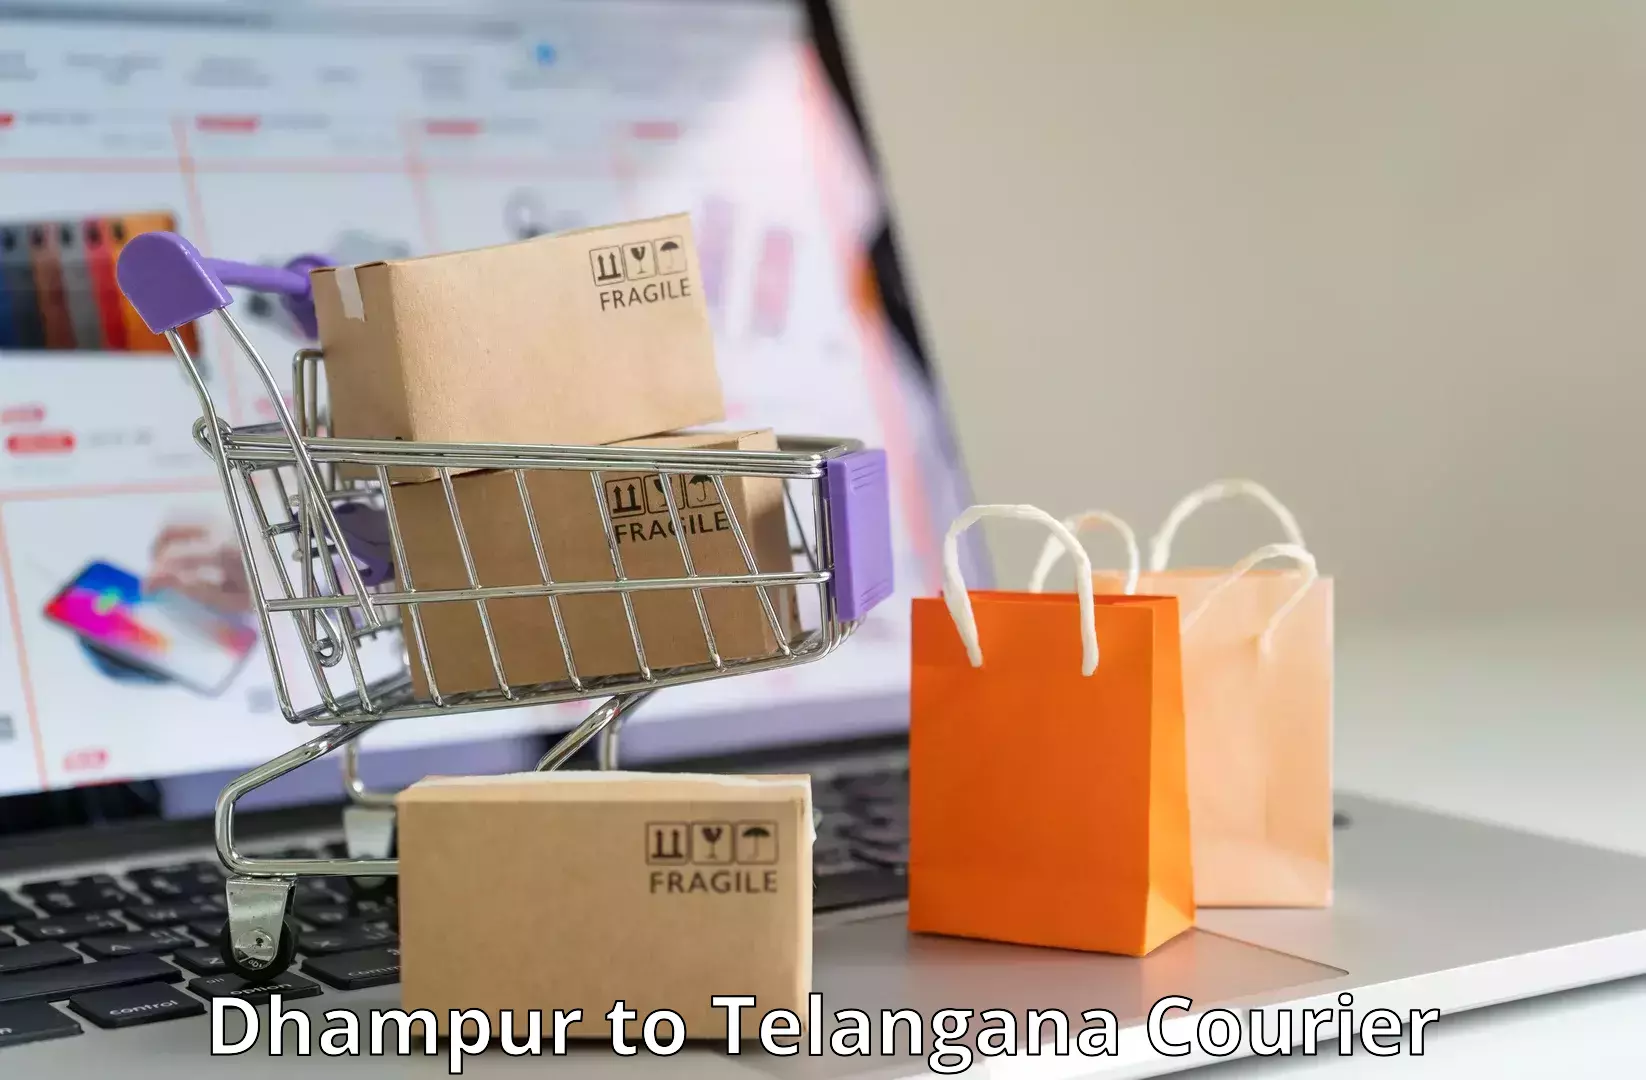 Courier service comparison Dhampur to Mahabubnagar